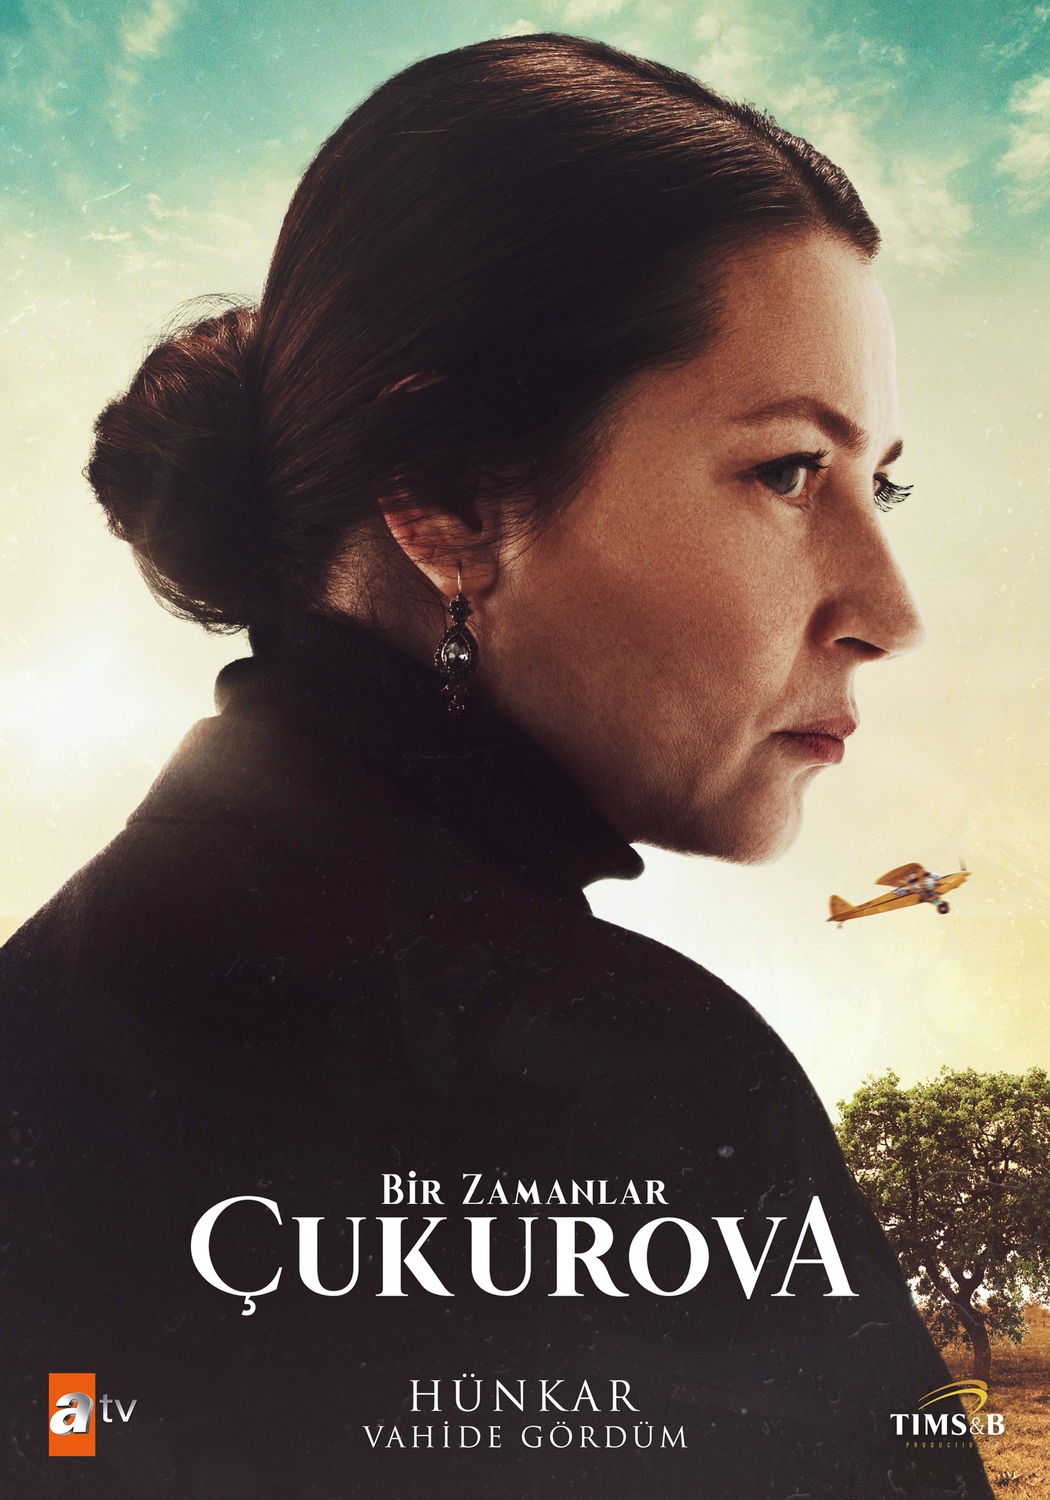 Extra Large TV Poster Image for Bir zamanlar Çukurova (#12 of 12)